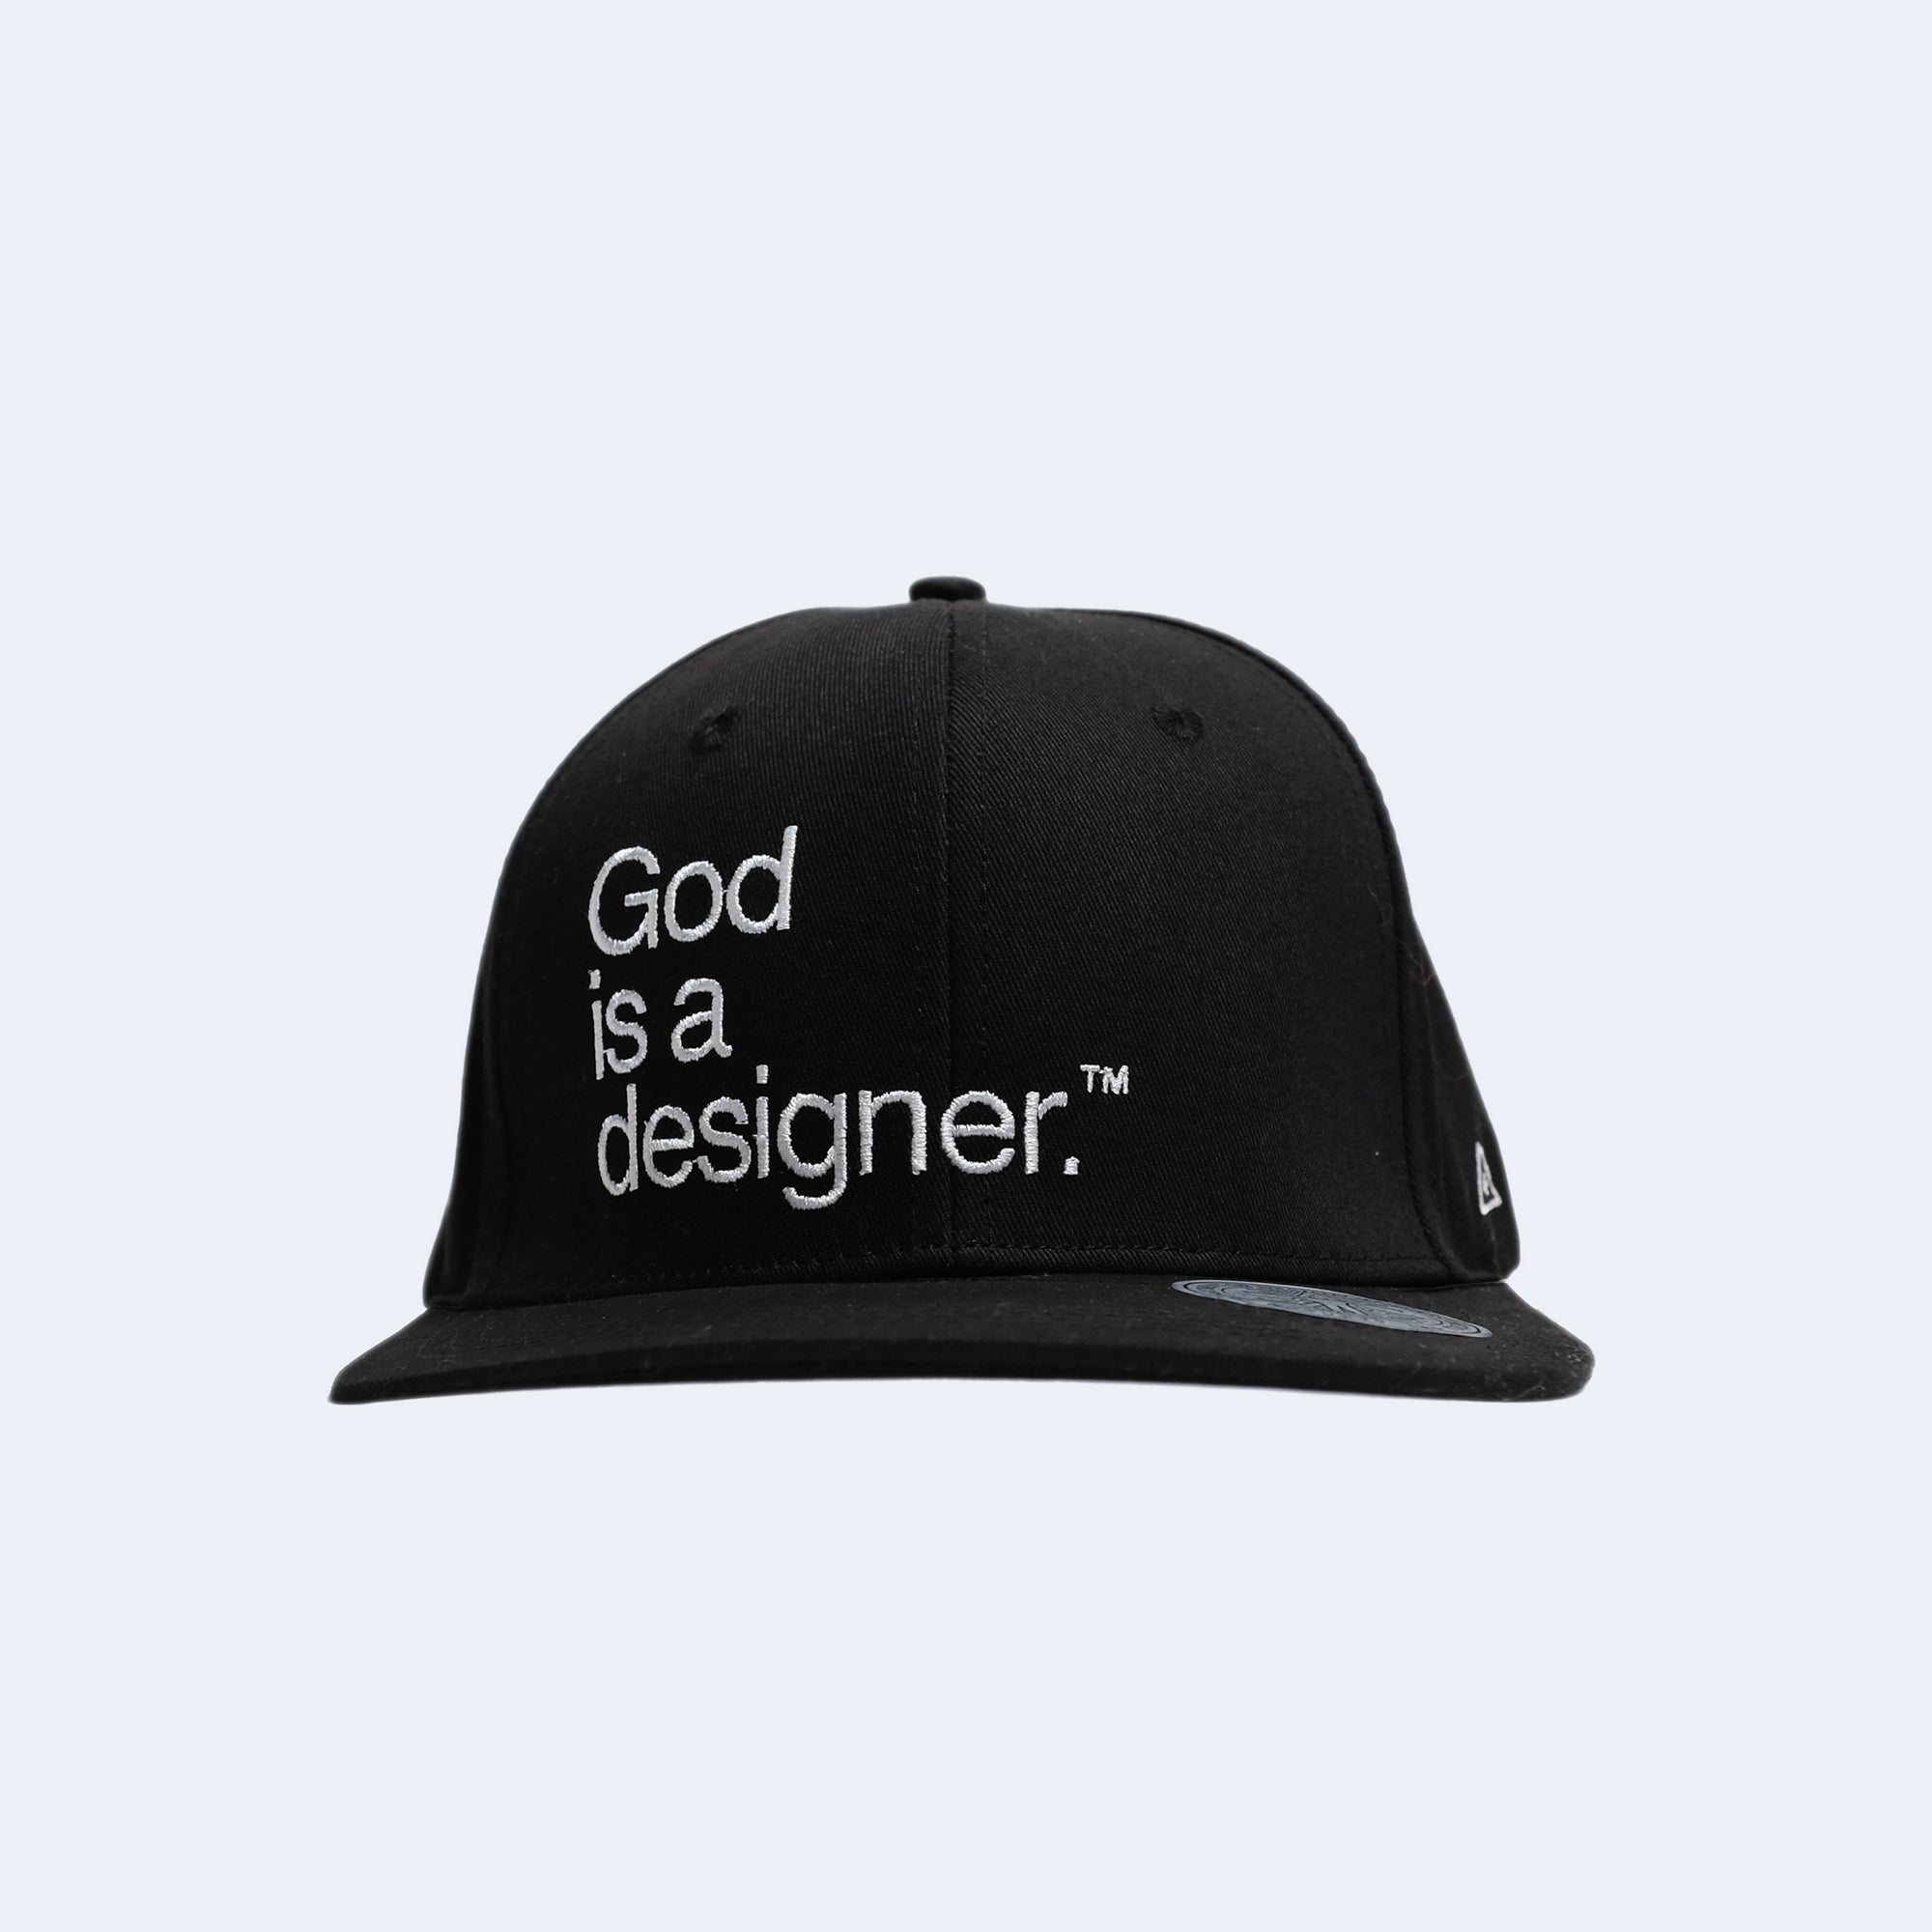 GIAD™ Classic 6-Panel Snapback [Black] - God is a designer.®